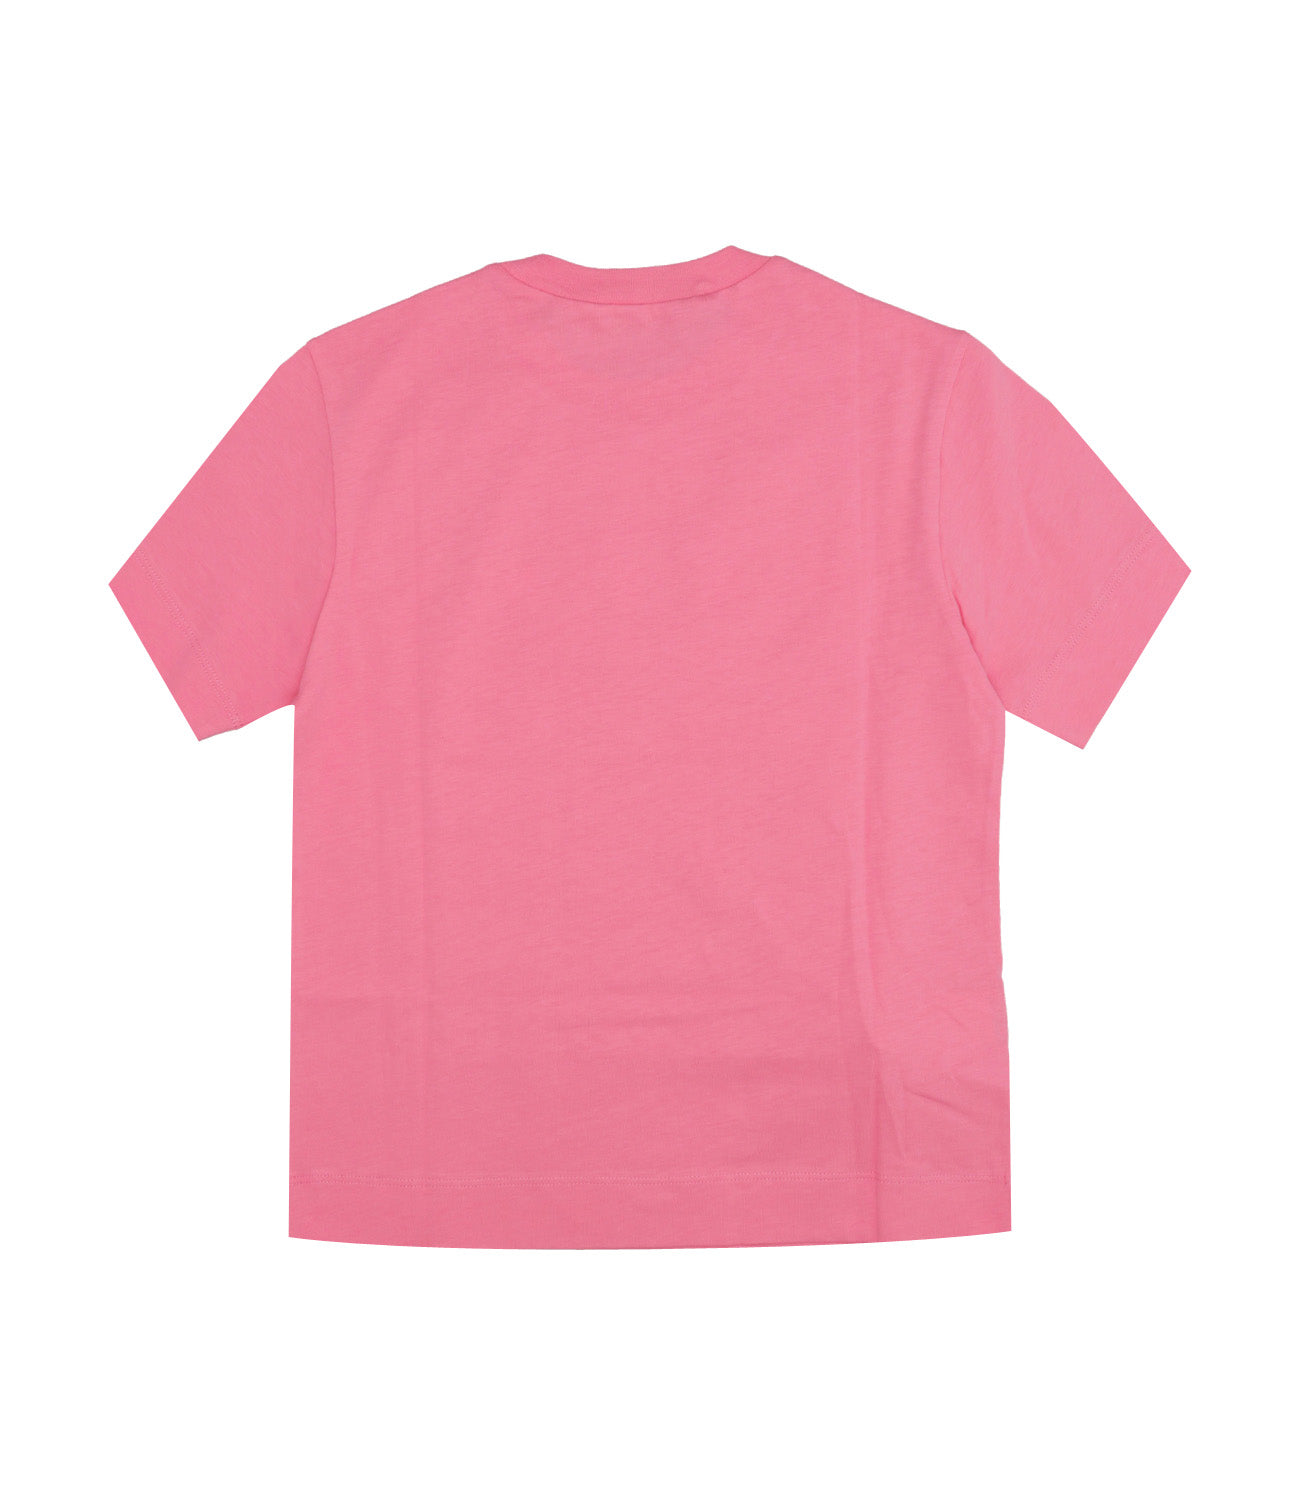 Marni Kids | T-Shirt Rosa Pesca